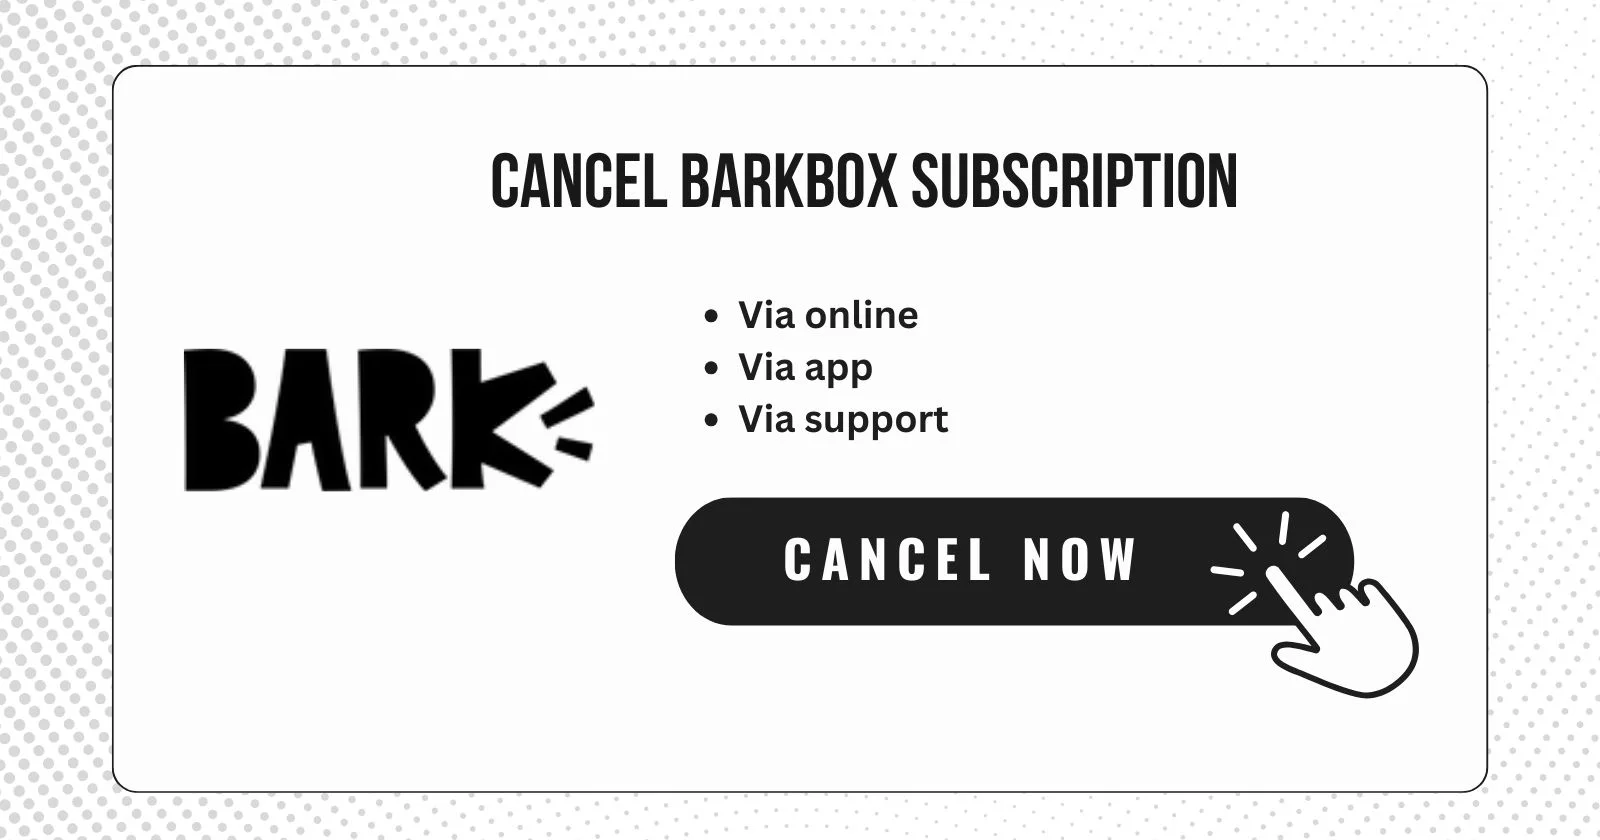 Cancel Barkbox Subscription